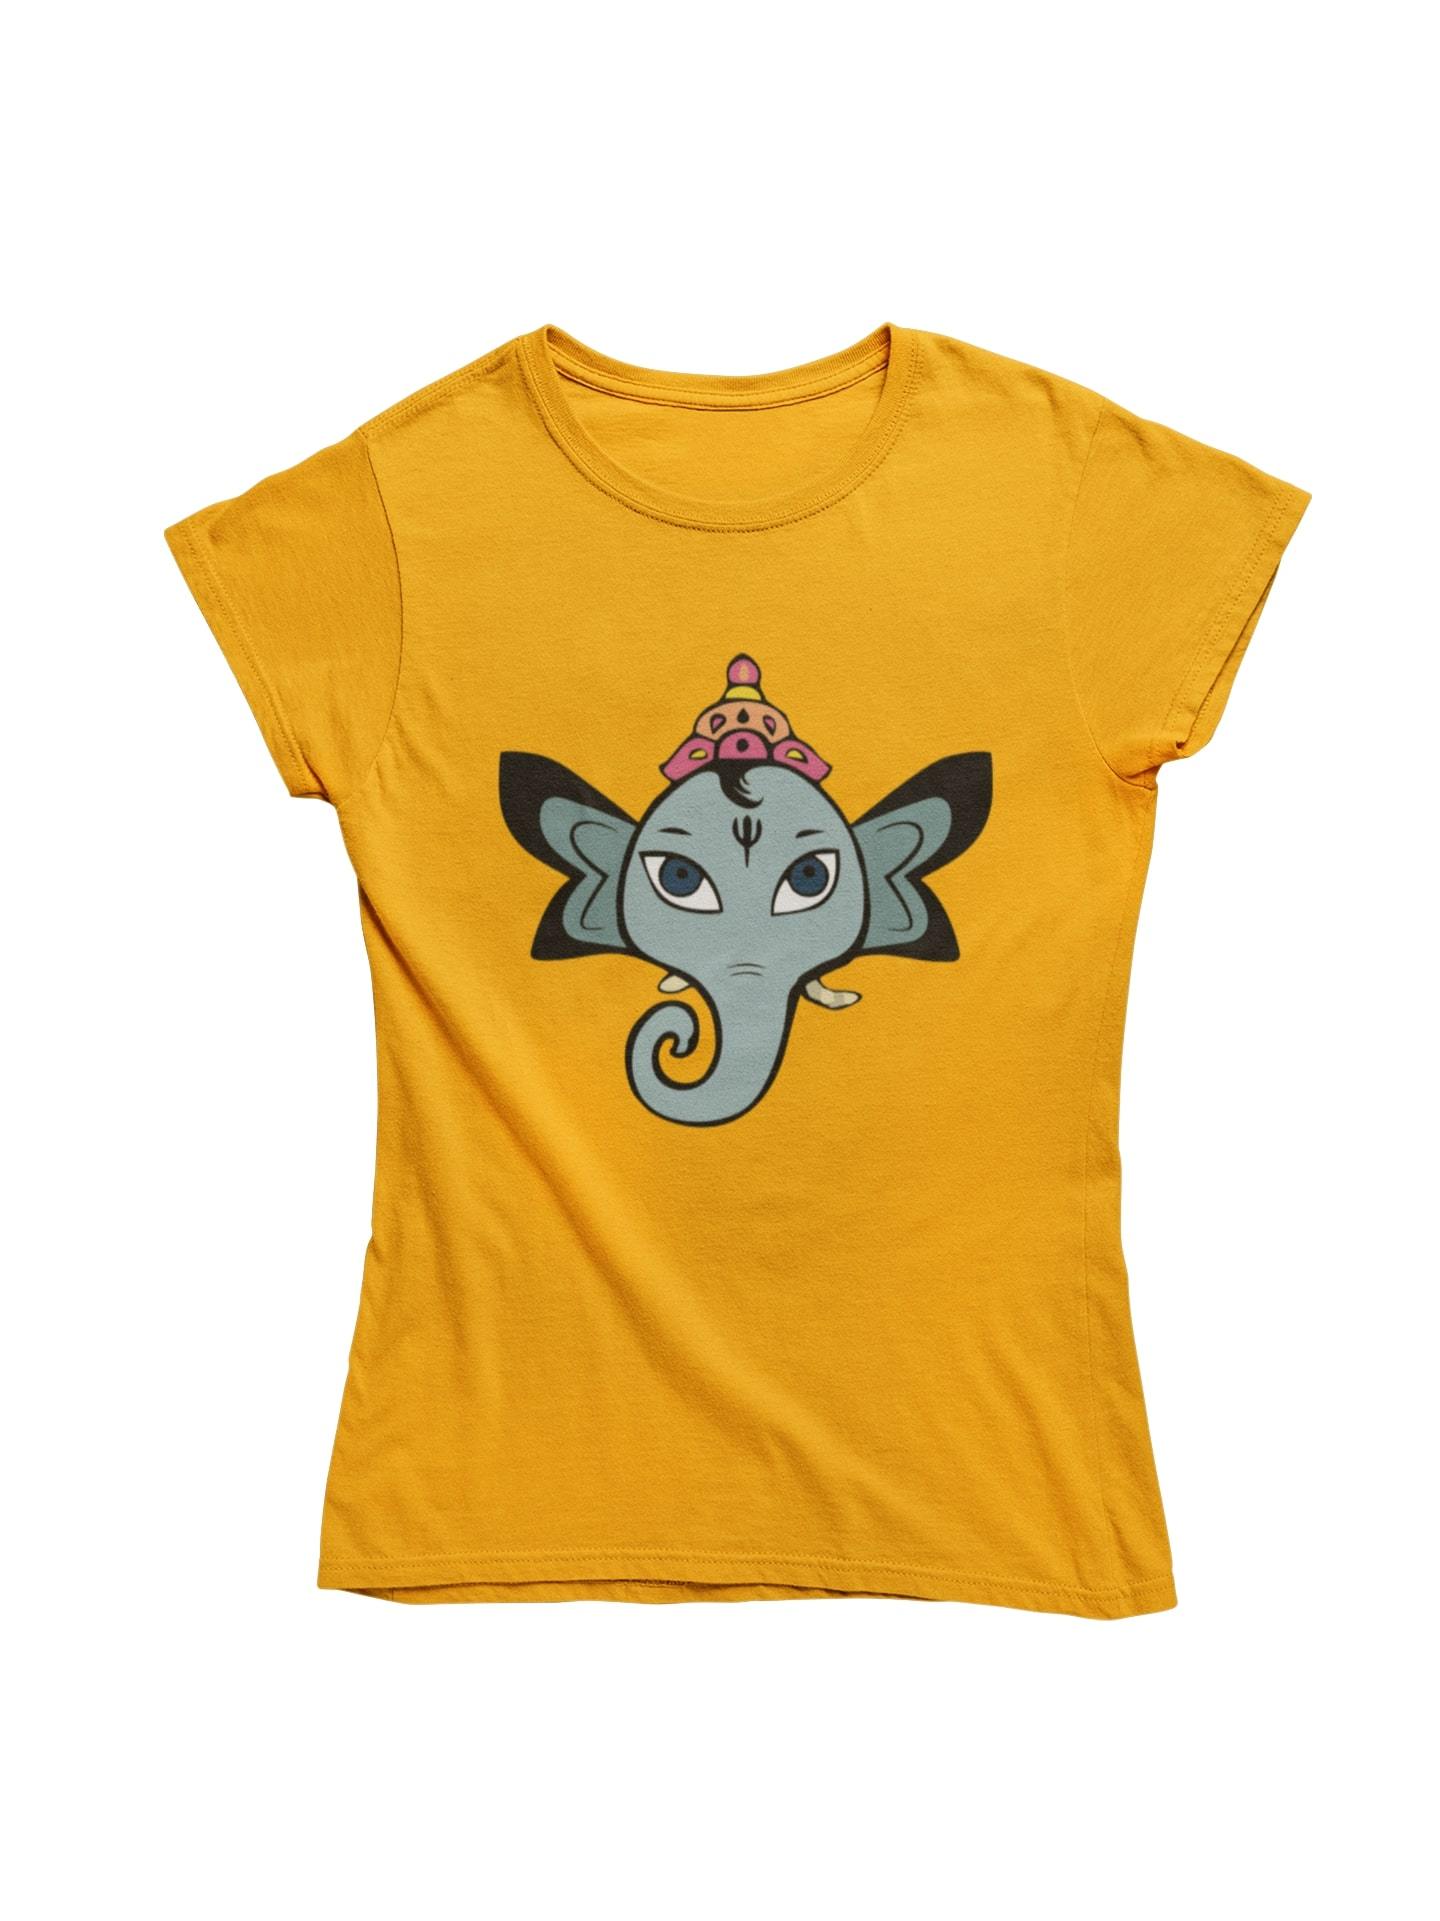 thelegalgang,Cute Ganesha Art T-Shirt,WOMEN.